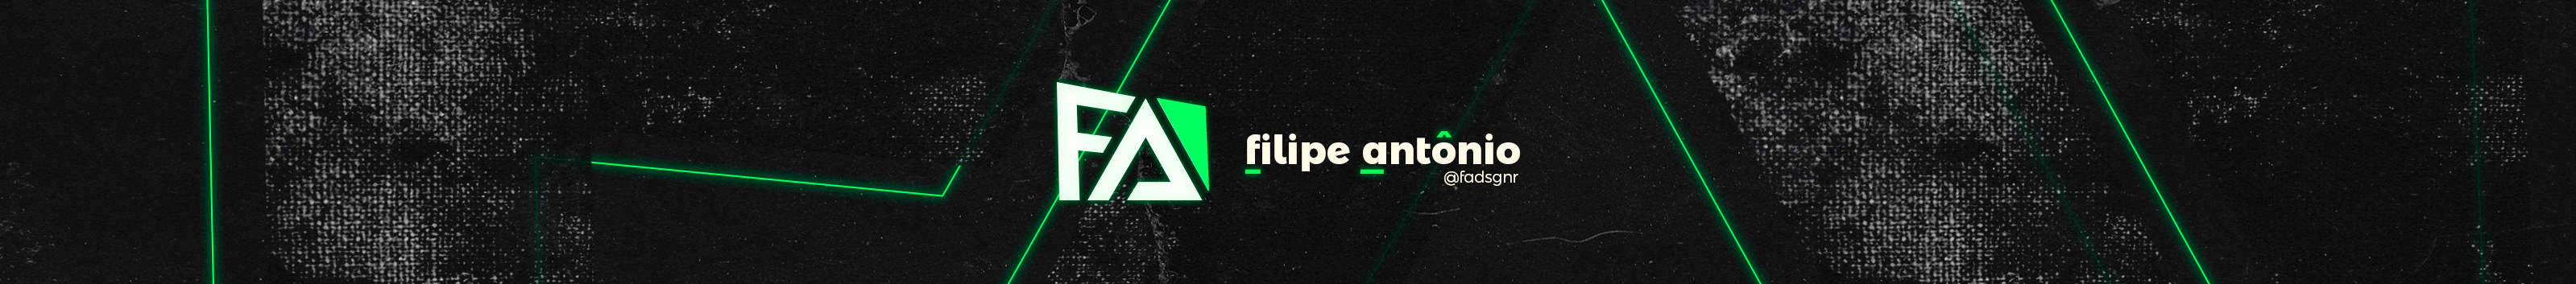 Profil-Banner von Filipe Antônio